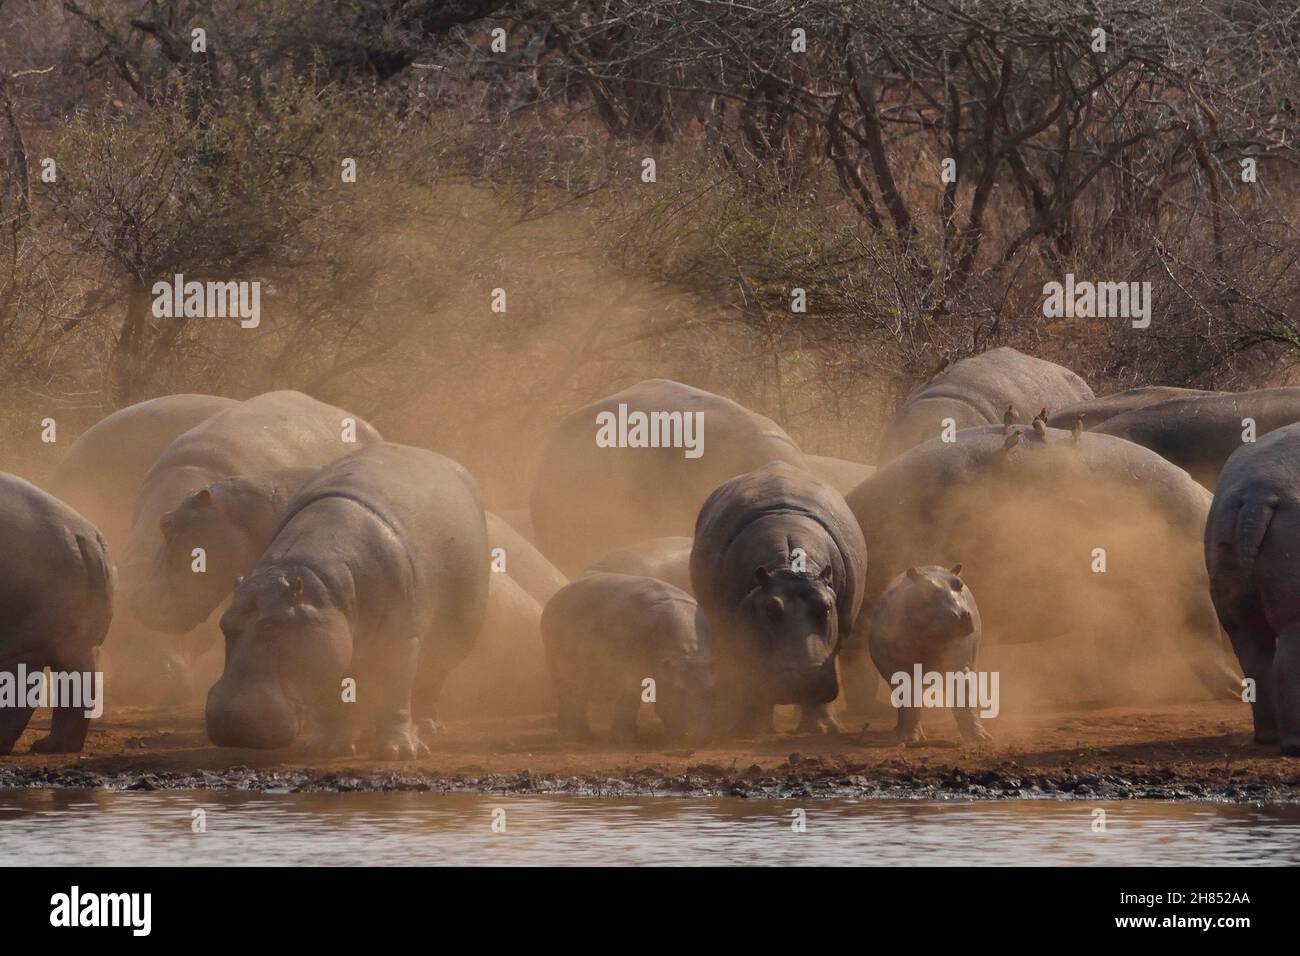 Flusspferd, hippo, common hippopotamus, Hippopotamus amphibius, Kruger-Nationalpark, Südafrika, Kruger National Park, Republic of South Africa Stock Photo